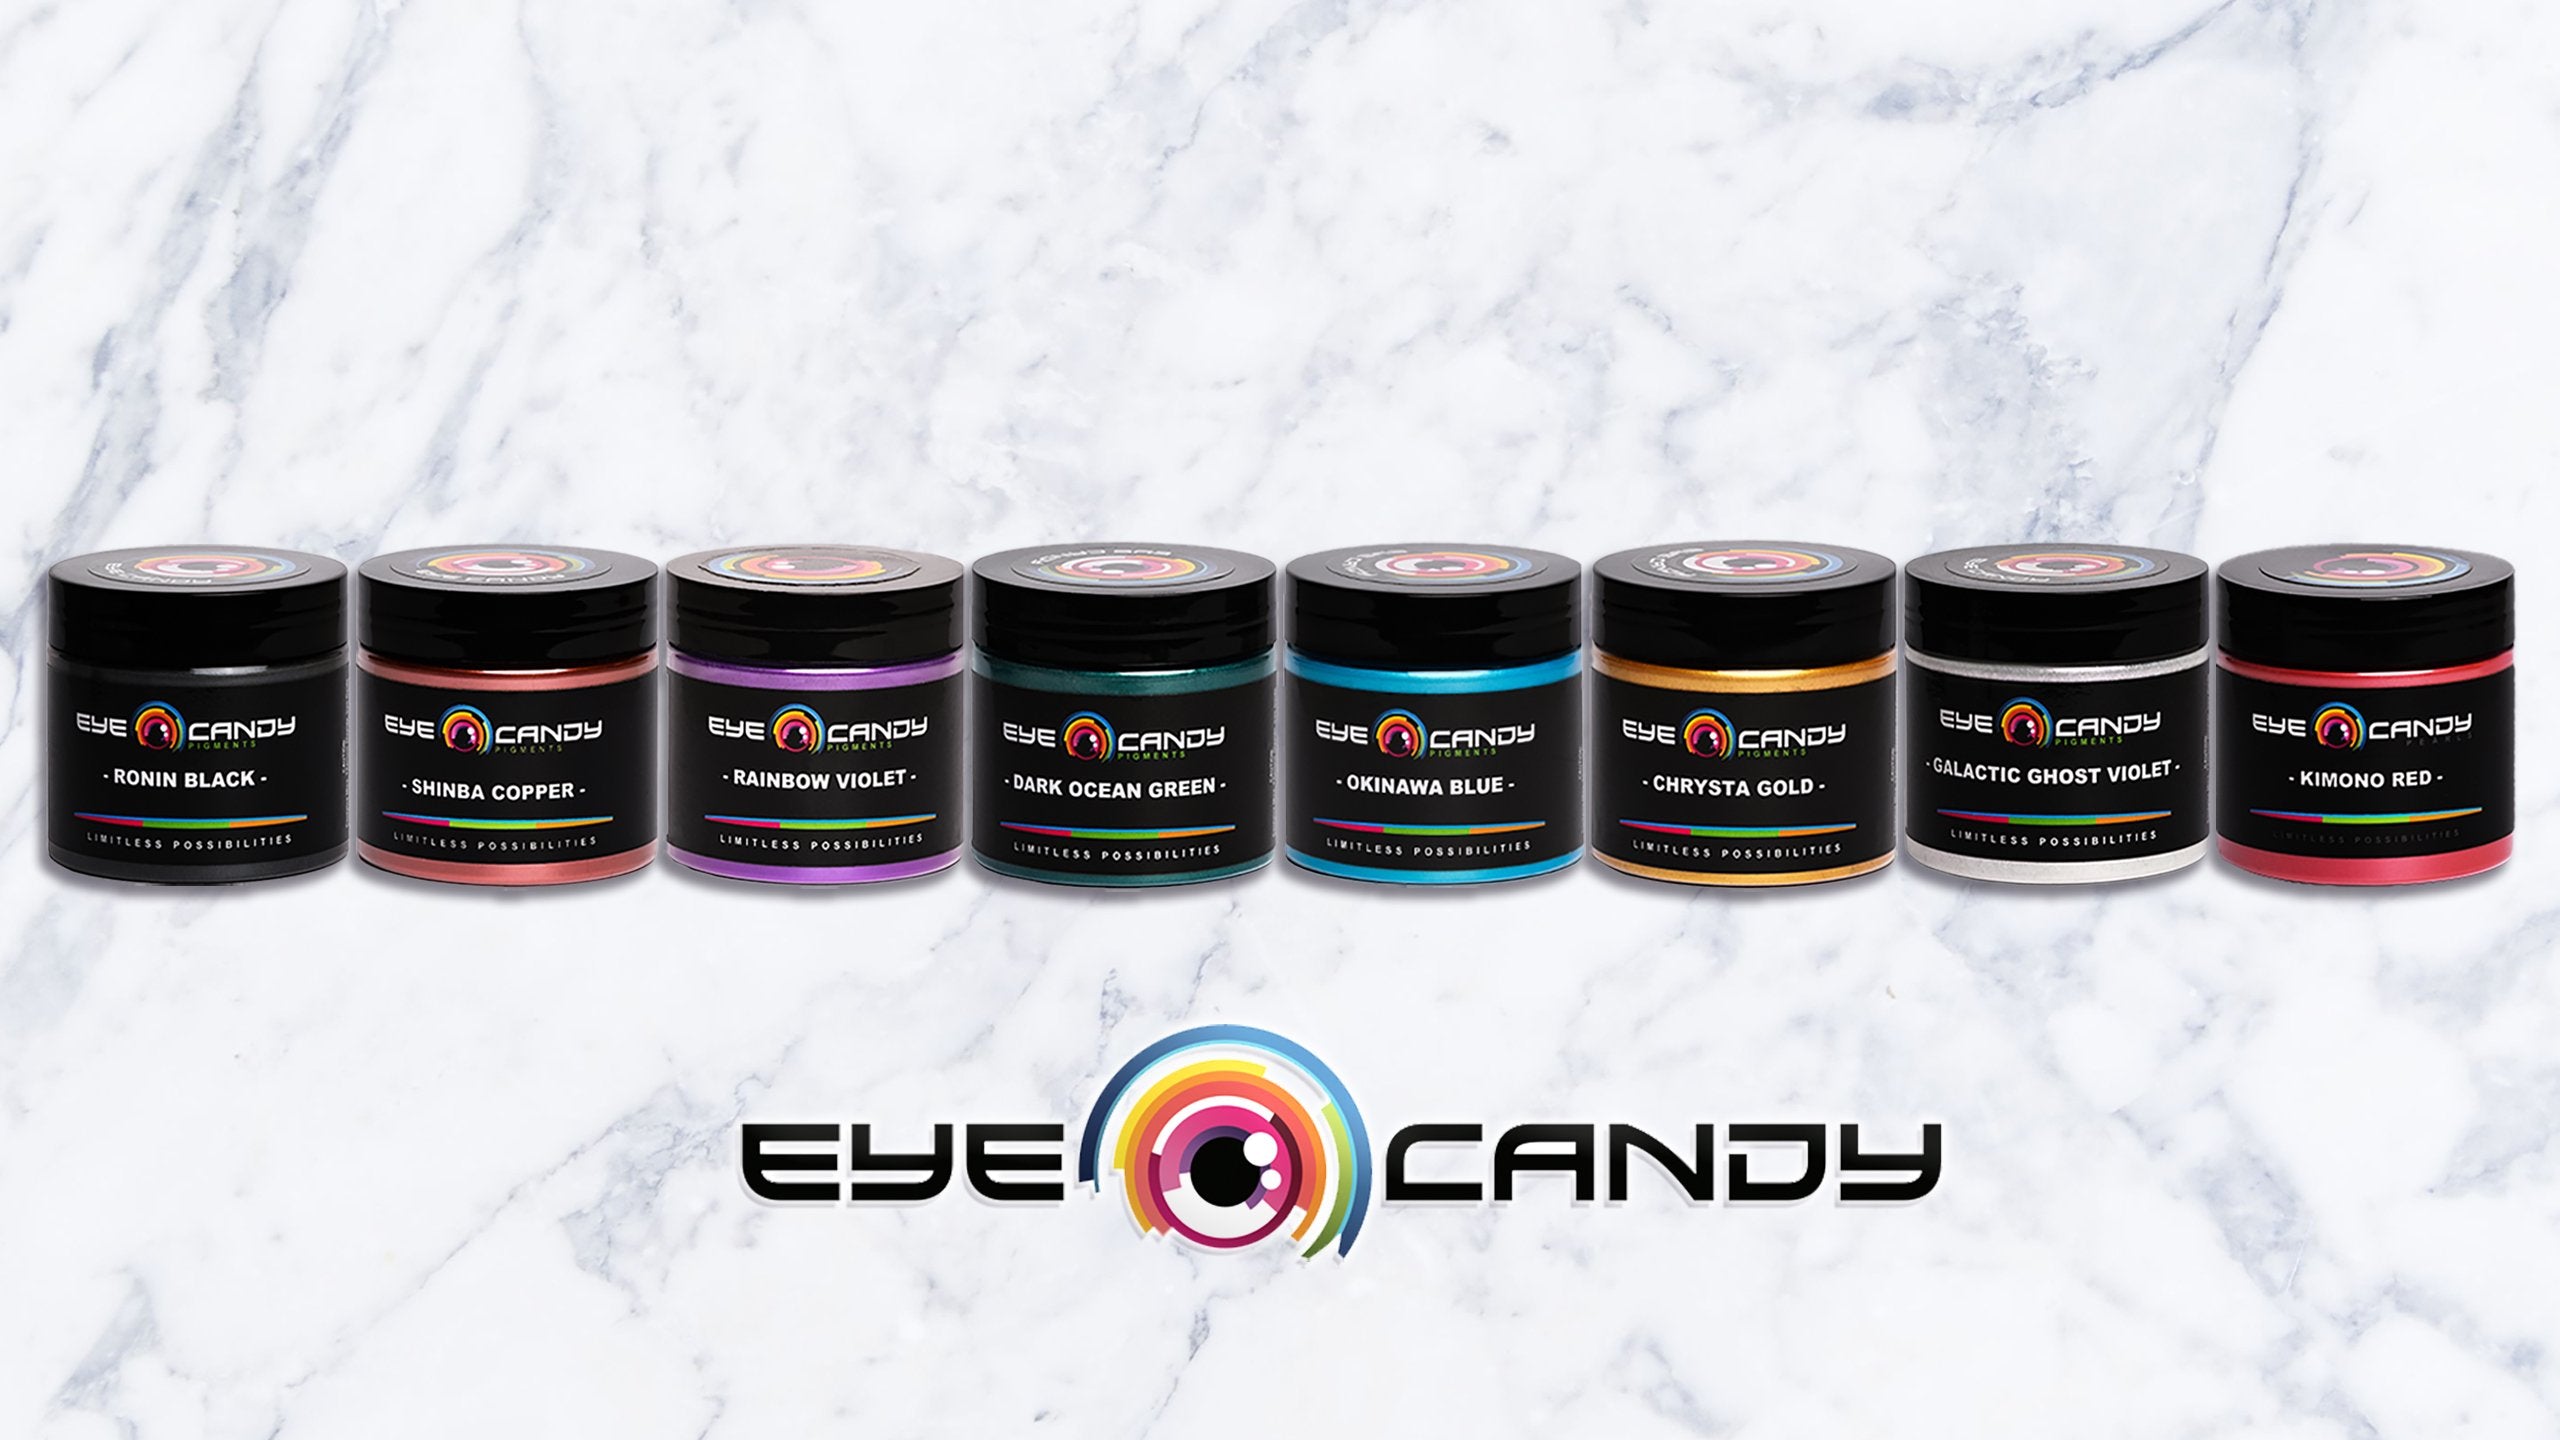 Samurai Black - Eye Candy Pigments - Black Mica Pigment Powders